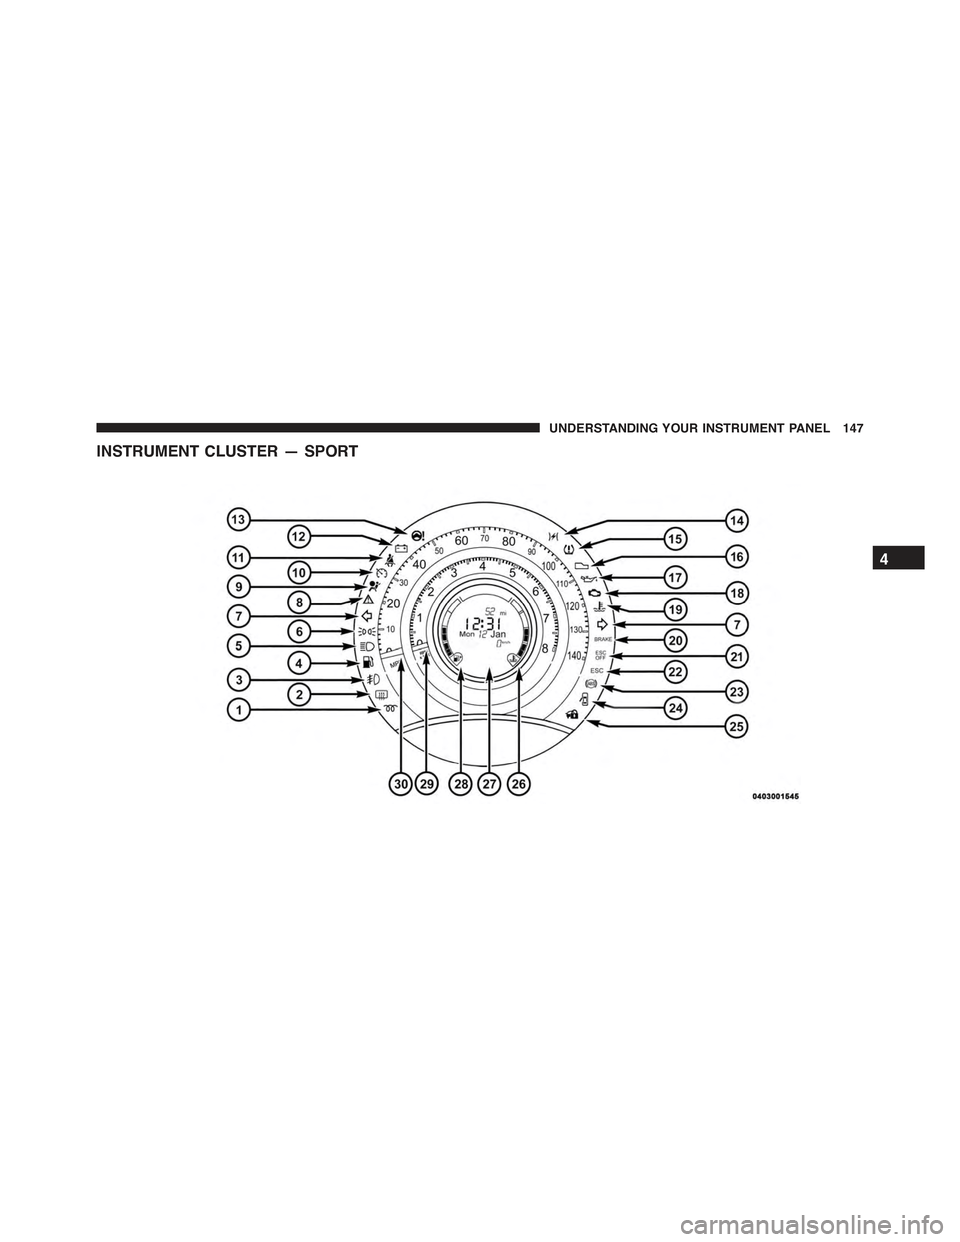 FIAT 500C 2013 2.G Owners Manual INSTRUMENT CLUSTER — SPORT
4
UNDERSTANDING YOUR INSTRUMENT PANEL 147 